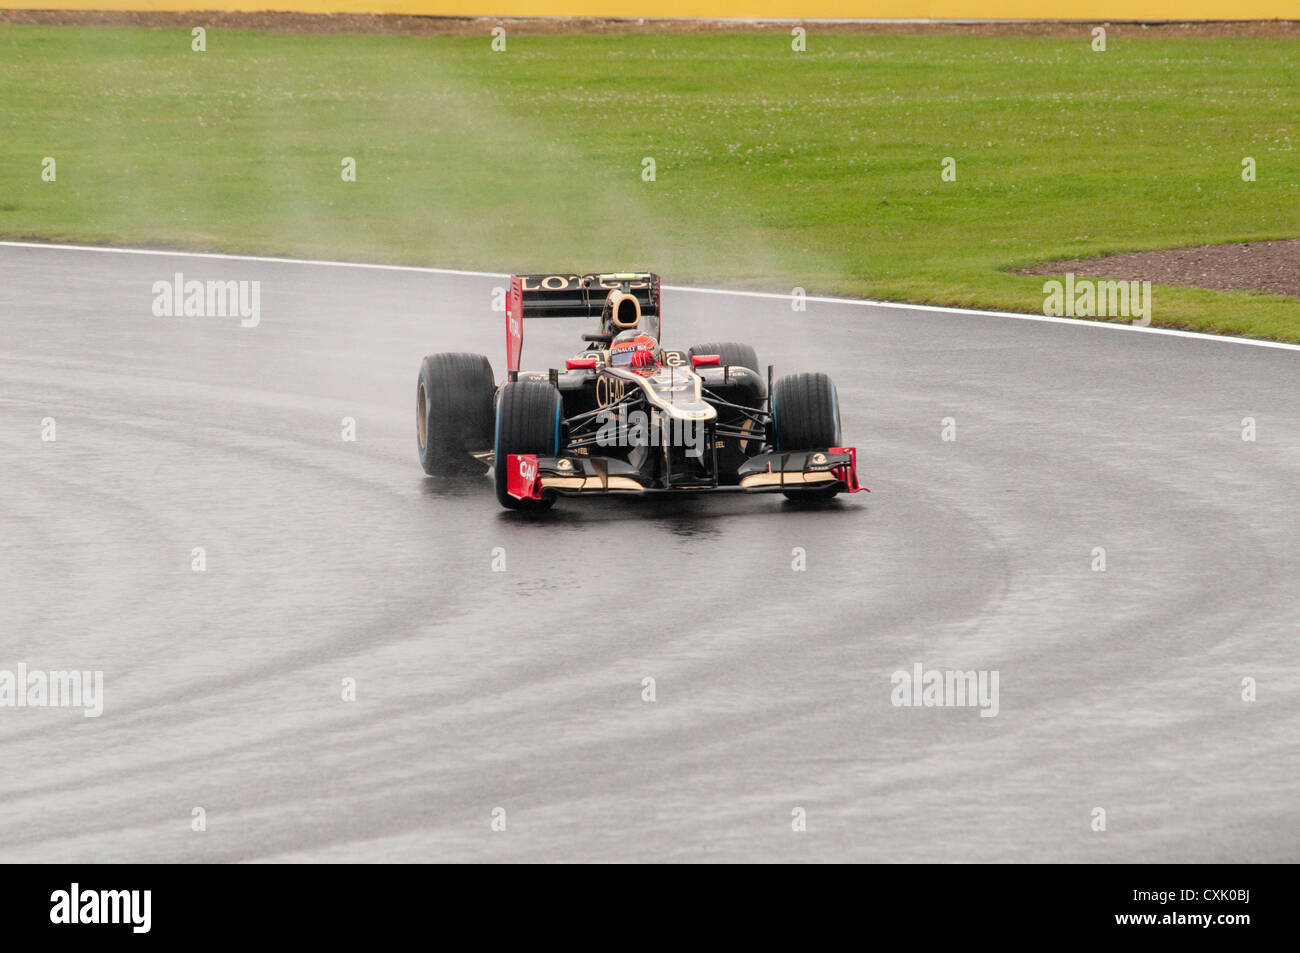 Romain Grosjean in his Lotus F1 Car in the Wet Stock Photo